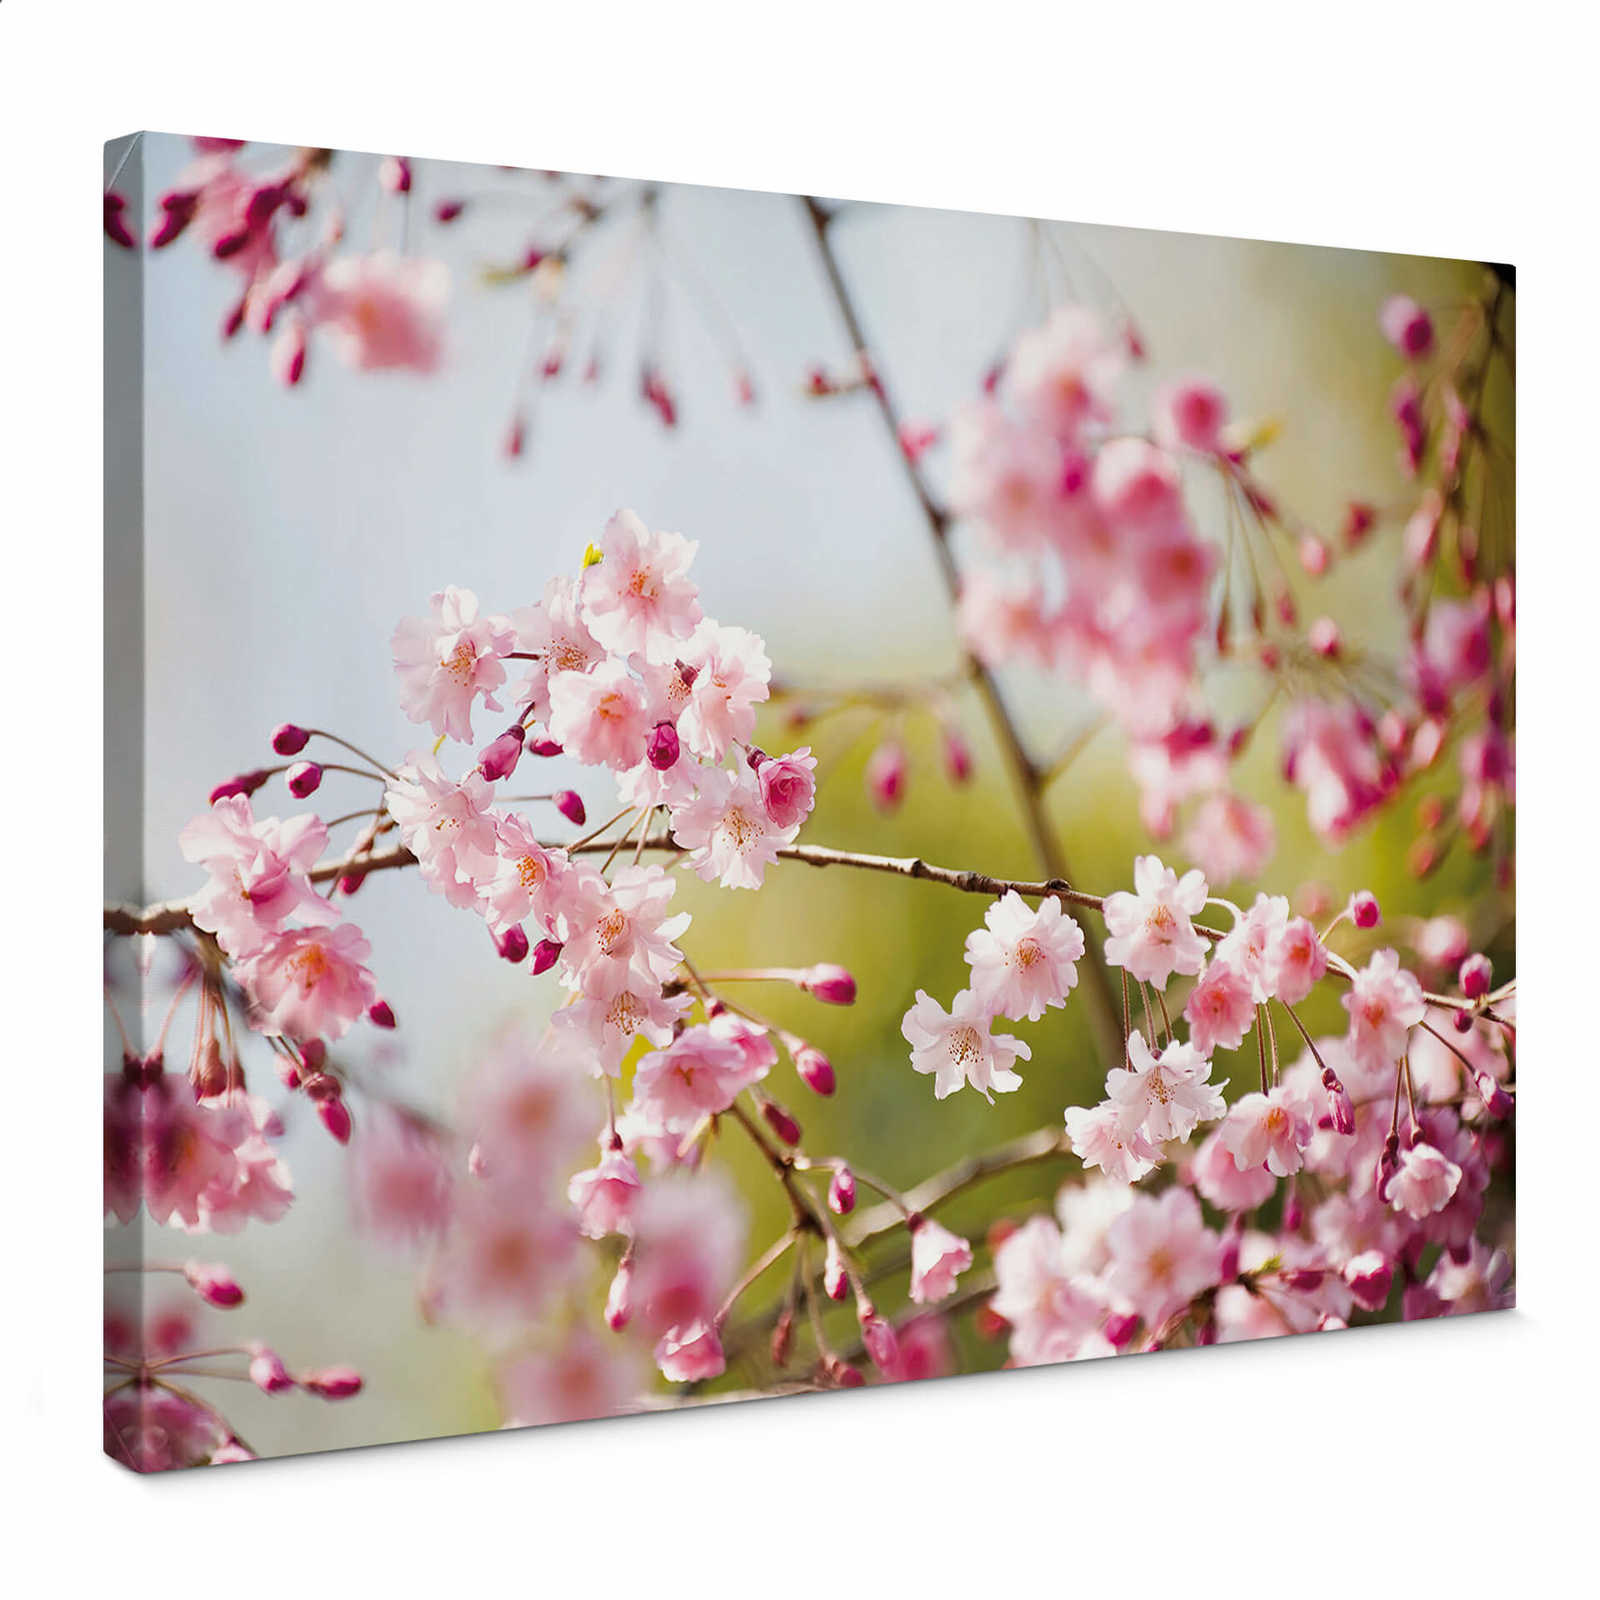 Natur Leinwandbild mit Kirschblüten Motiv – 0,70 m x 0,50 m
